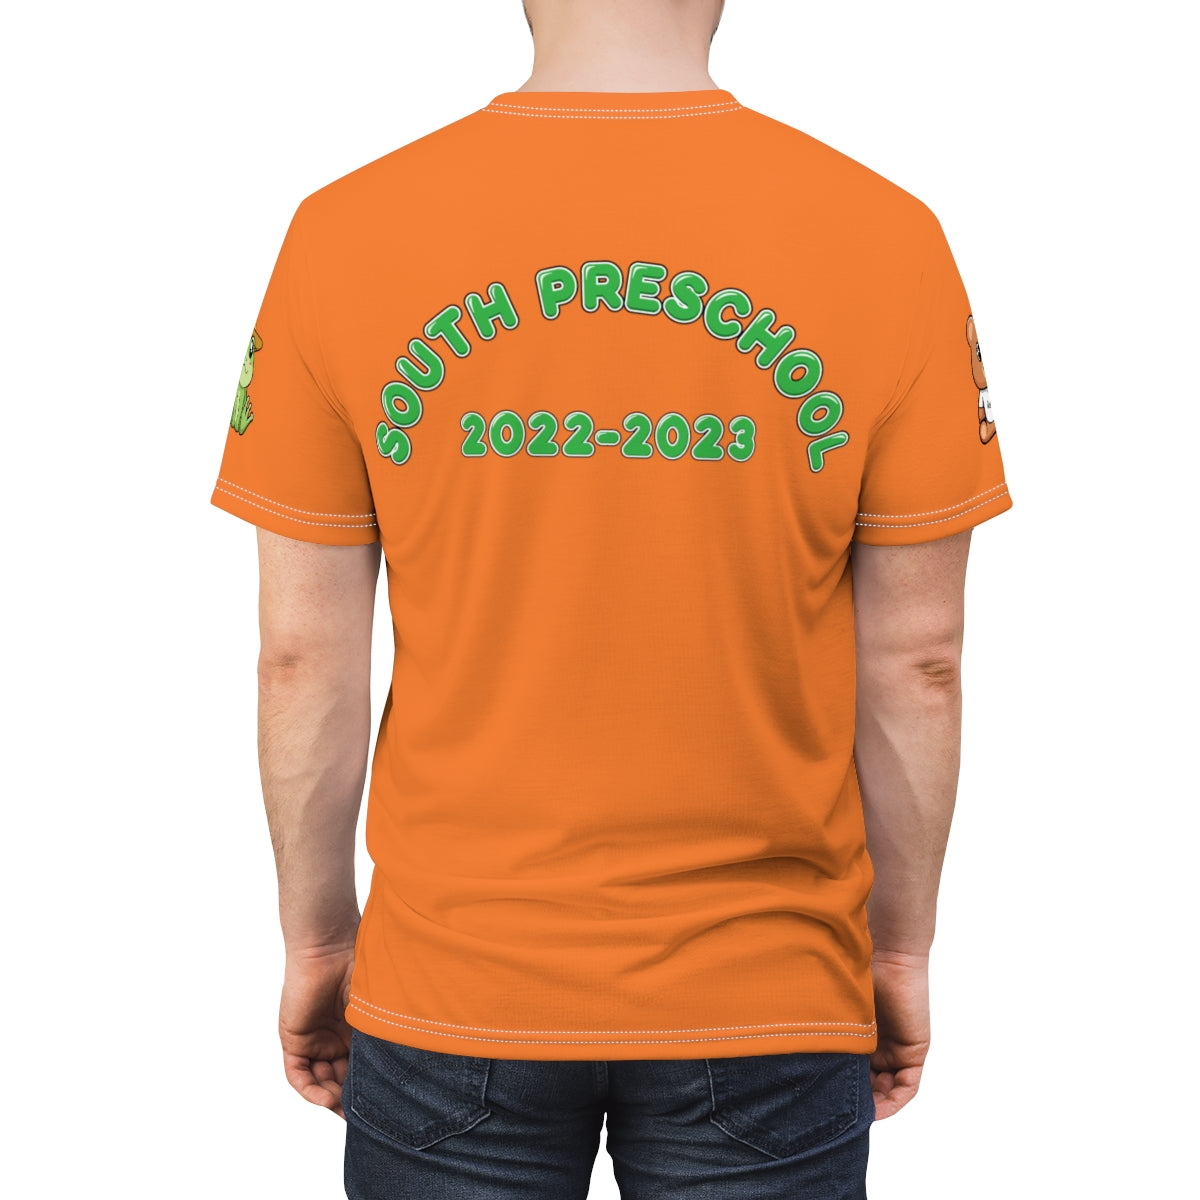 SPS Crusta Premium Shirt